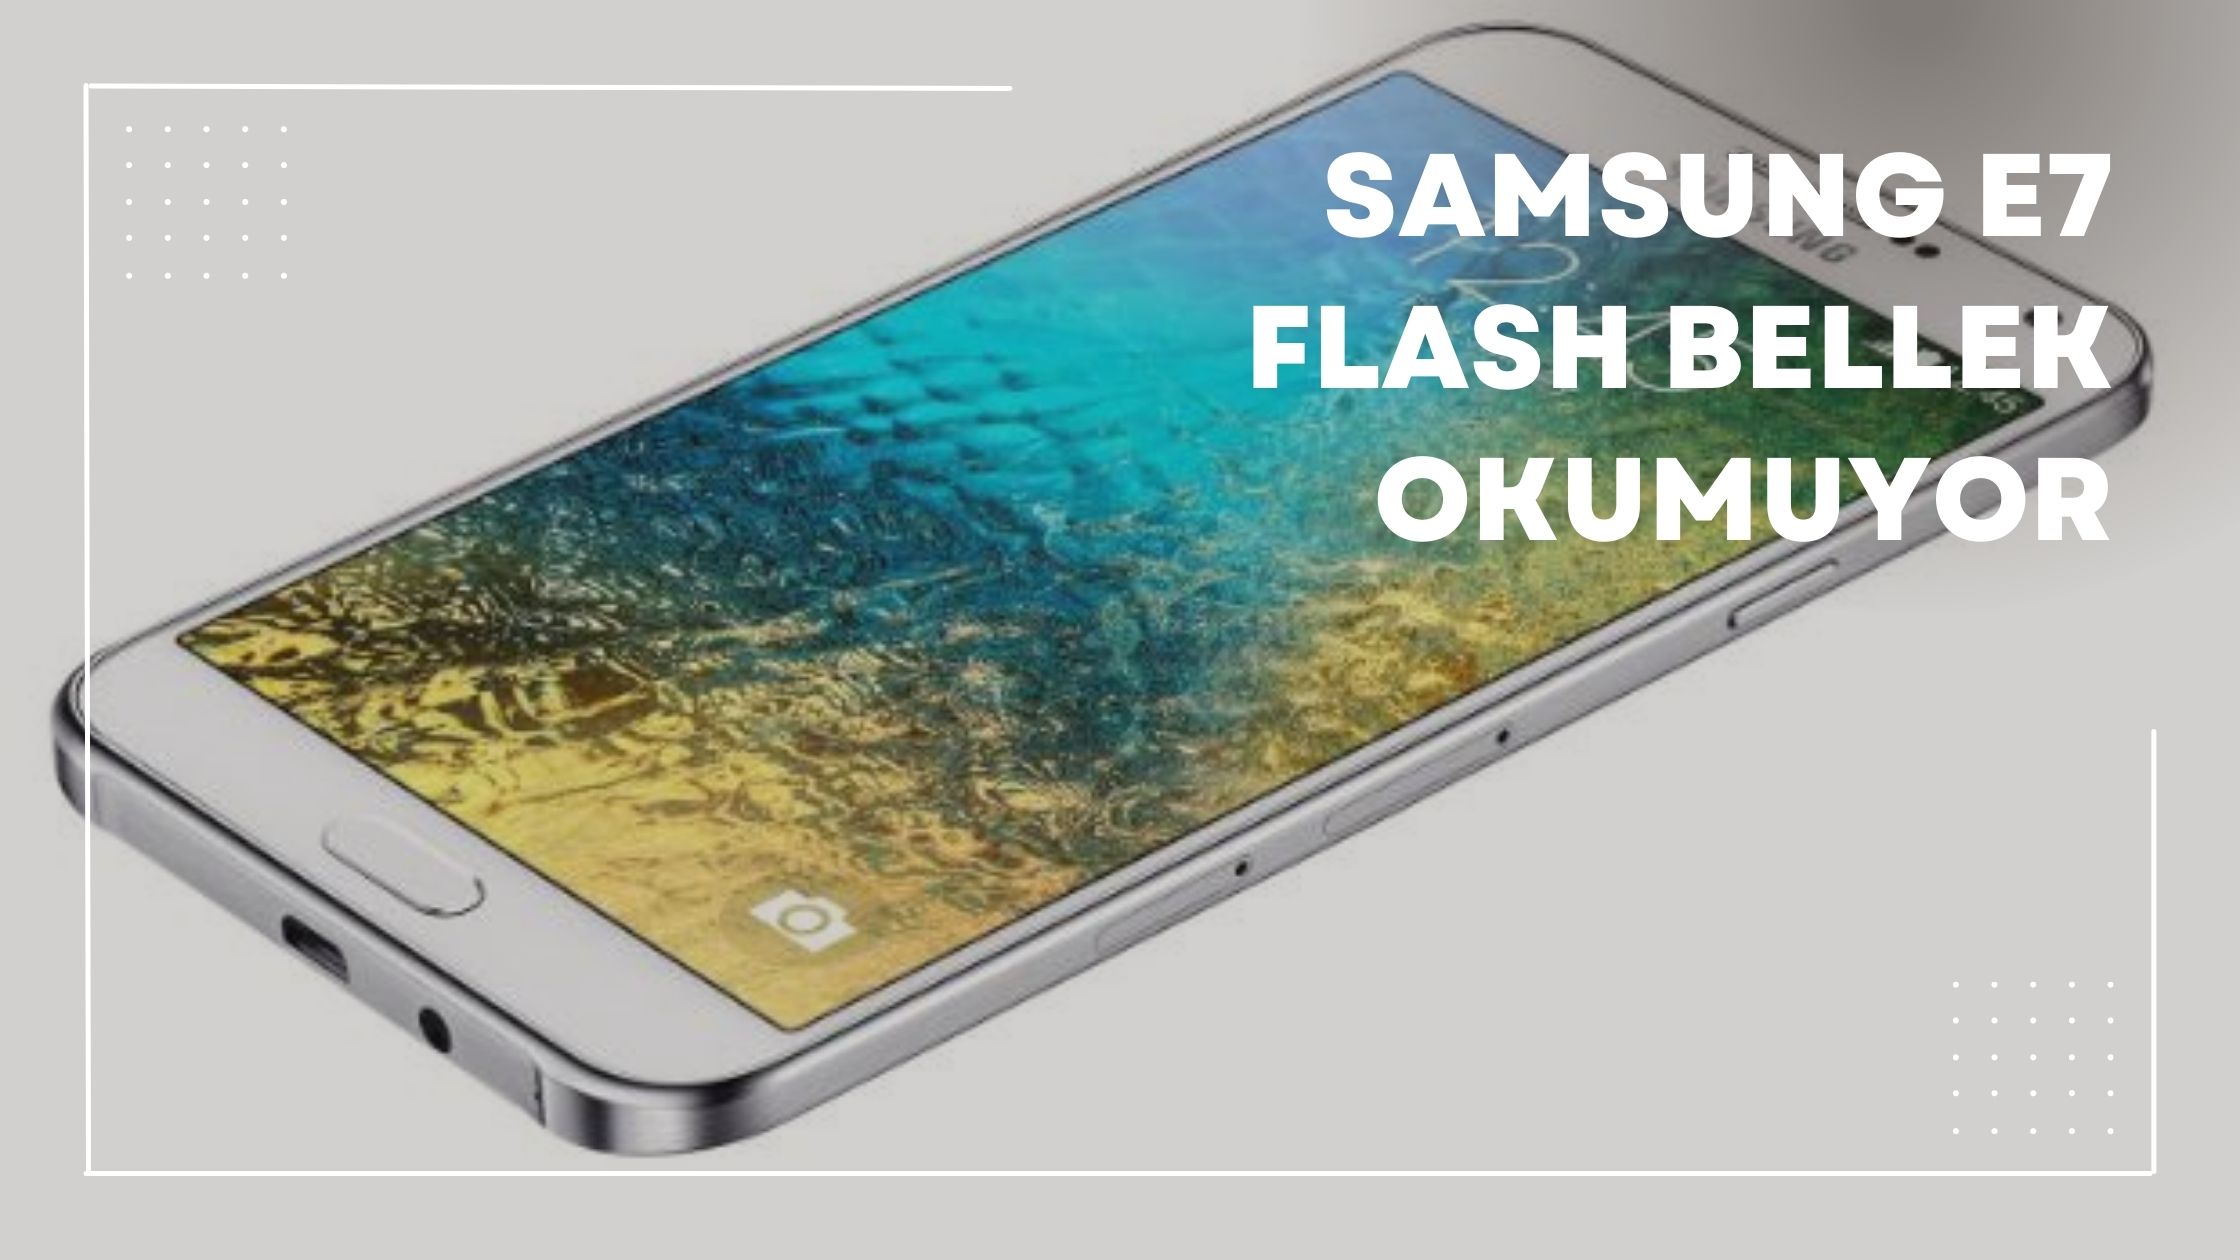 Samsung E7 Flash Bellek Okumuyor